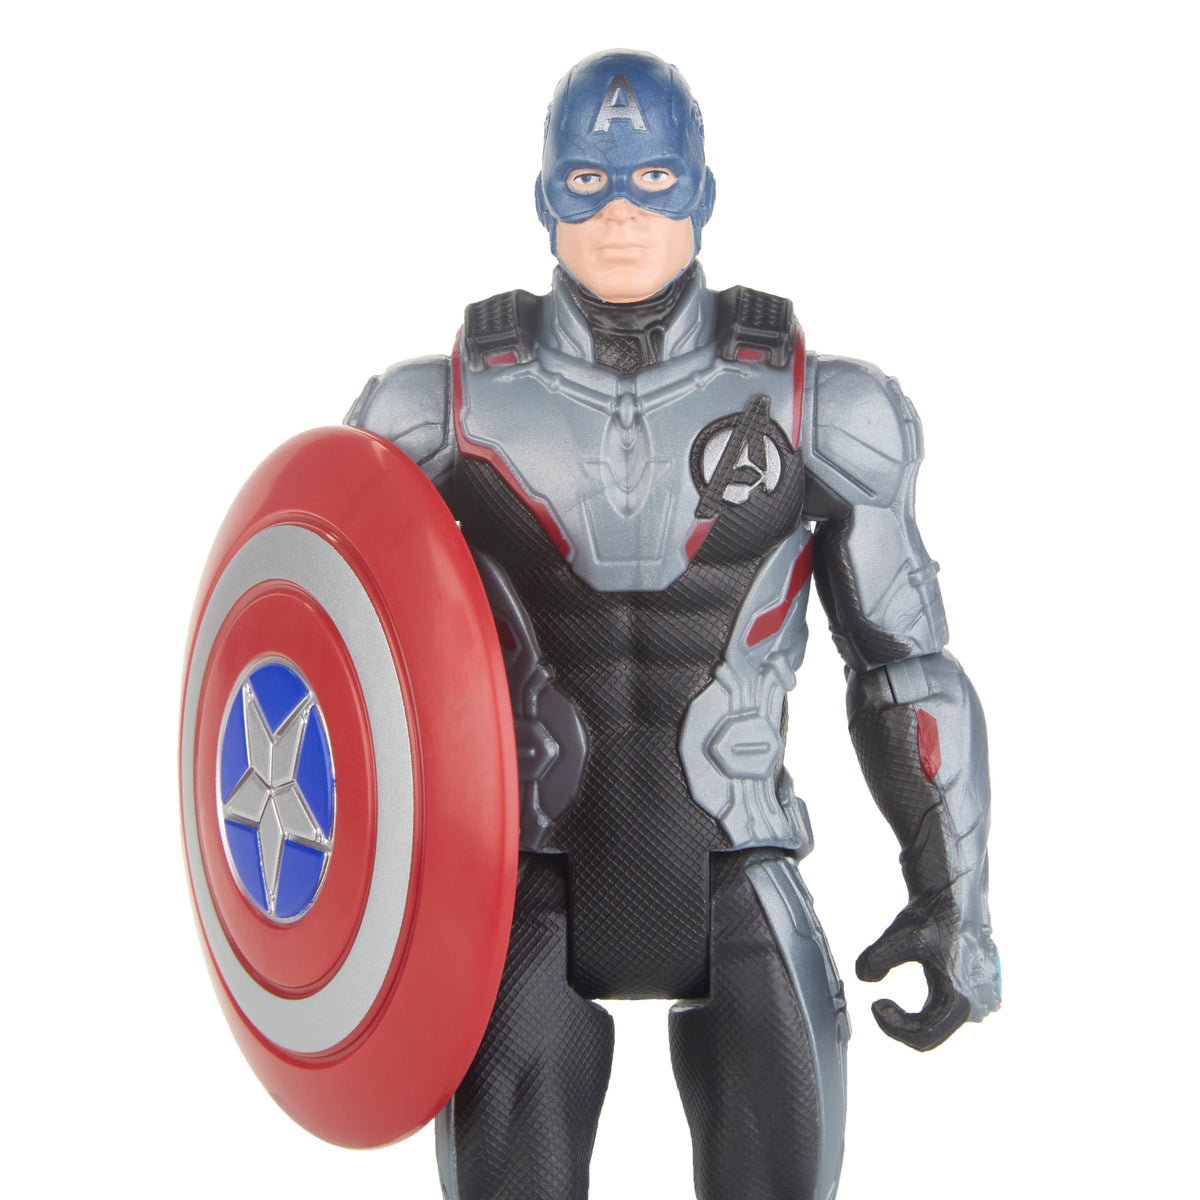 Marvel Avengers Captain America 6-Inch-Scale Super Hero Action Figure